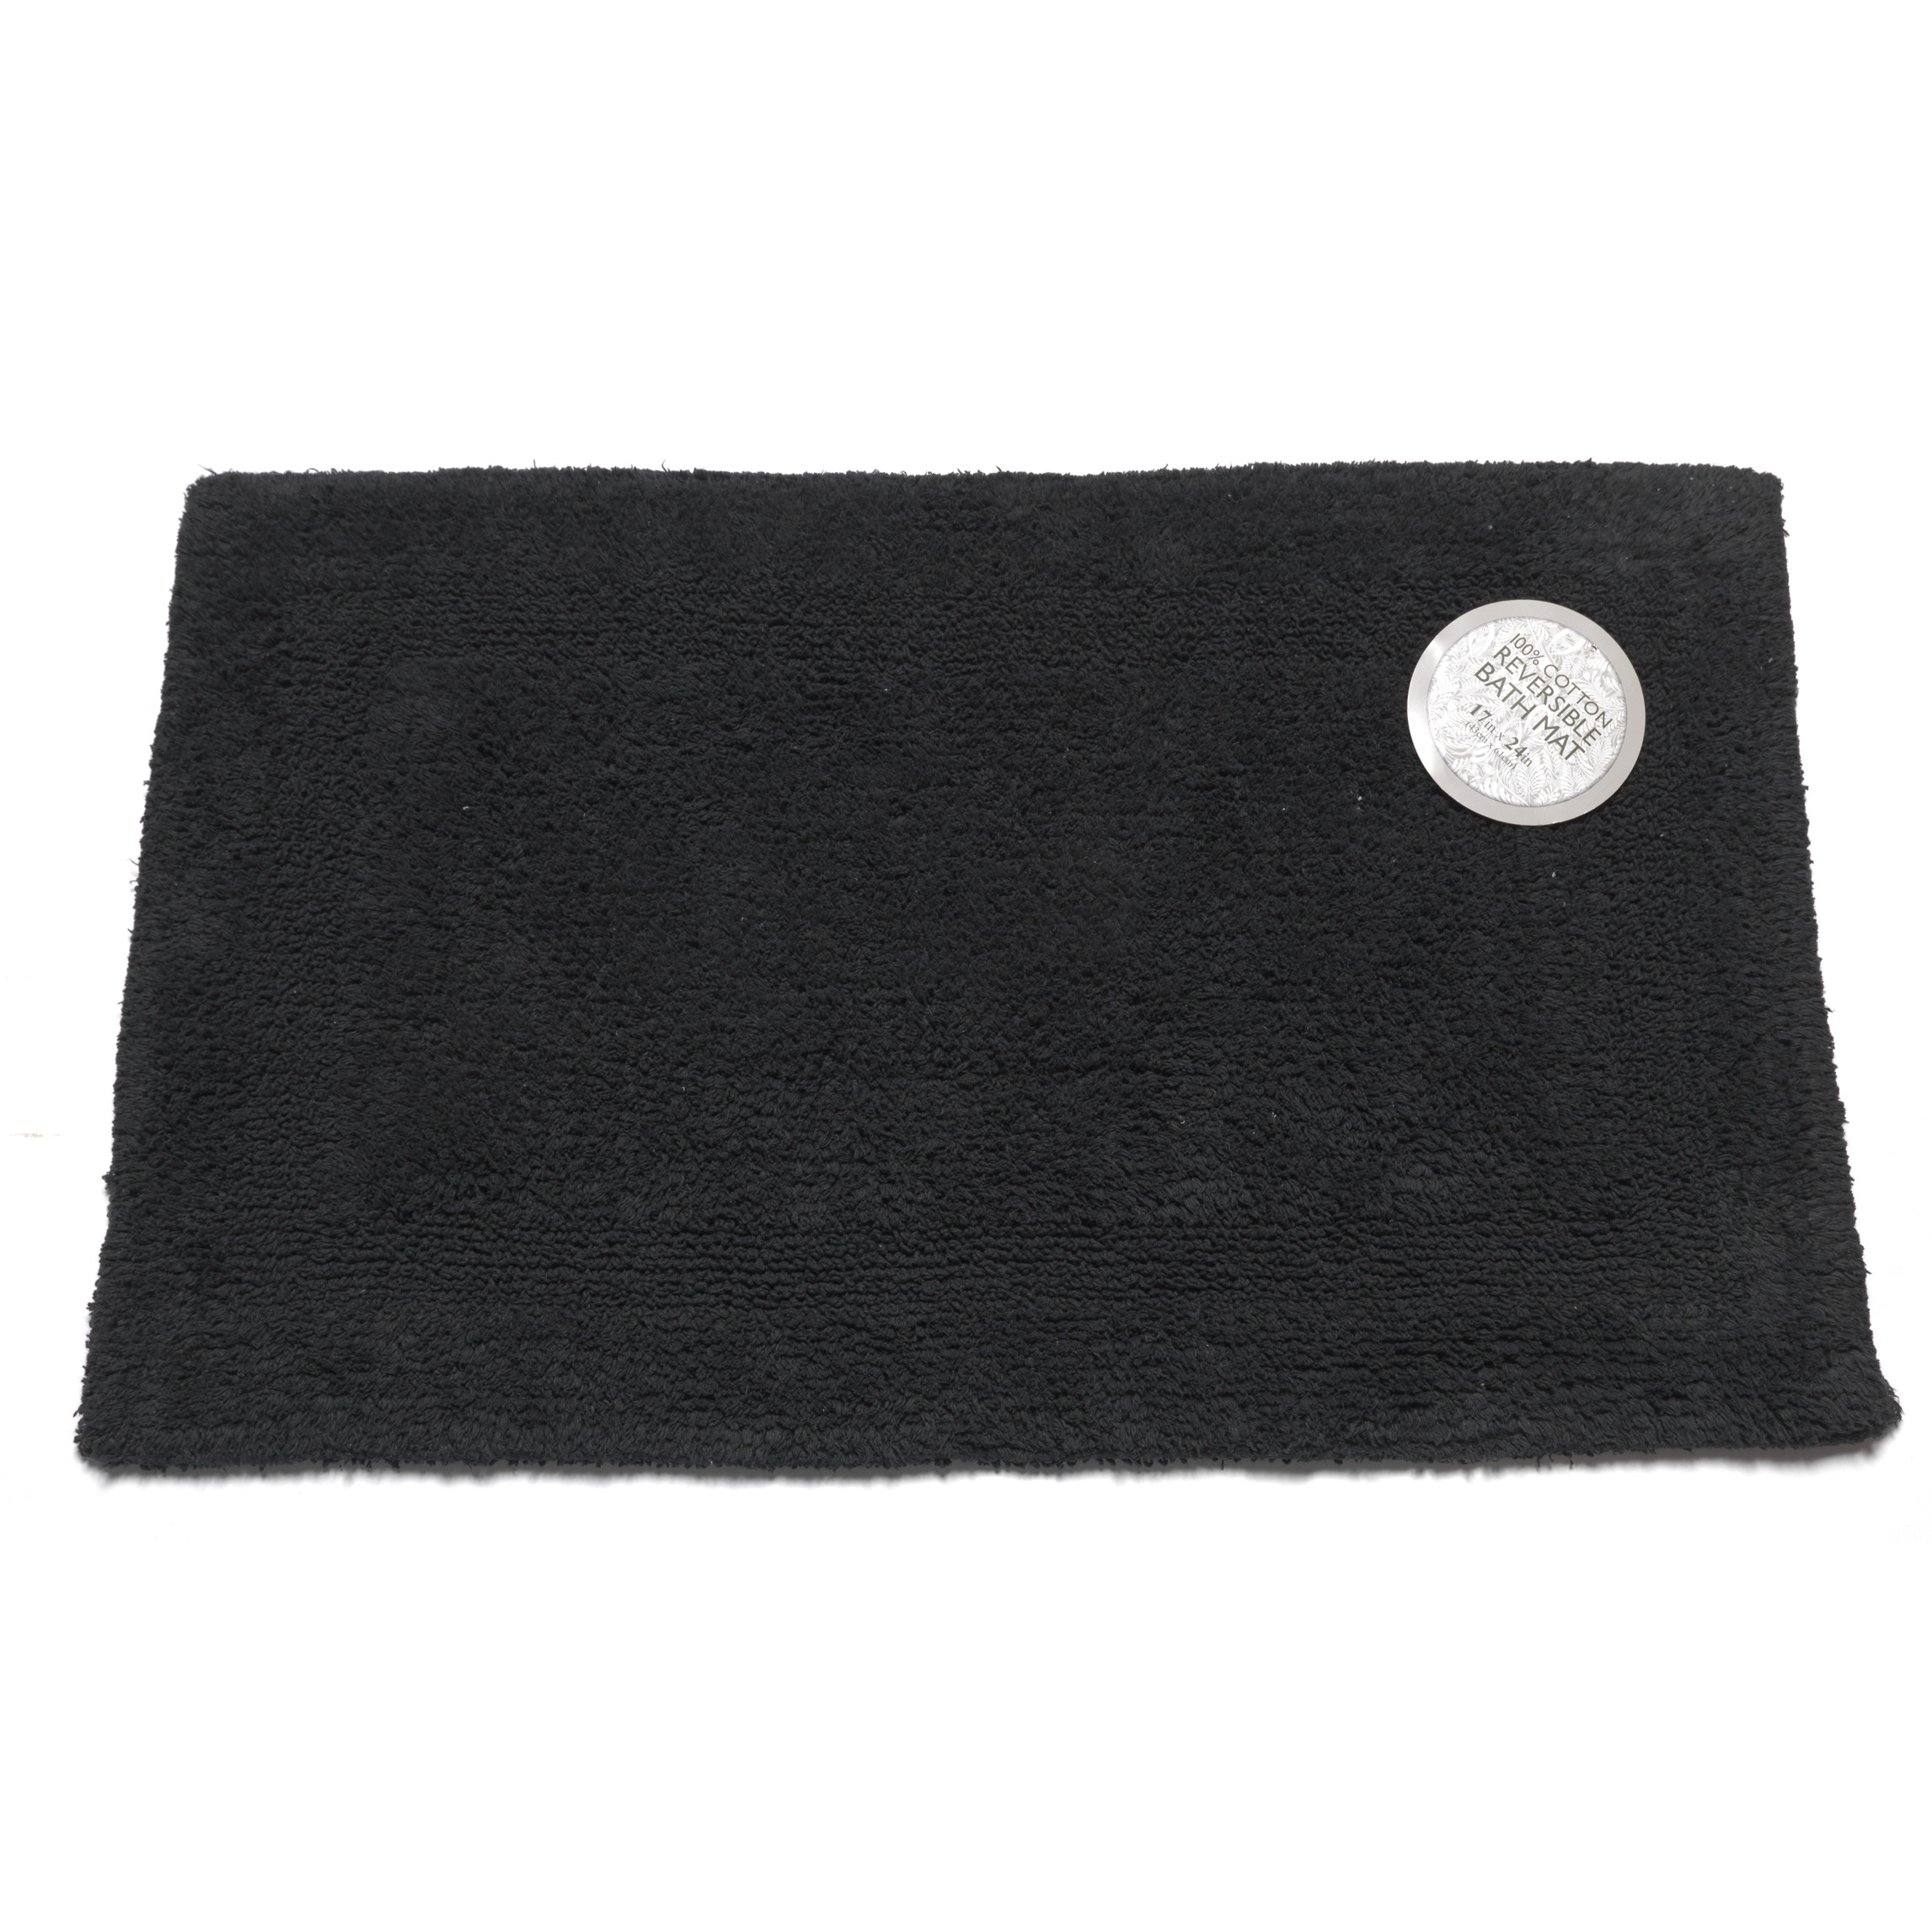 Medium-Sized, Reversible Cotton Bath Mat in Black